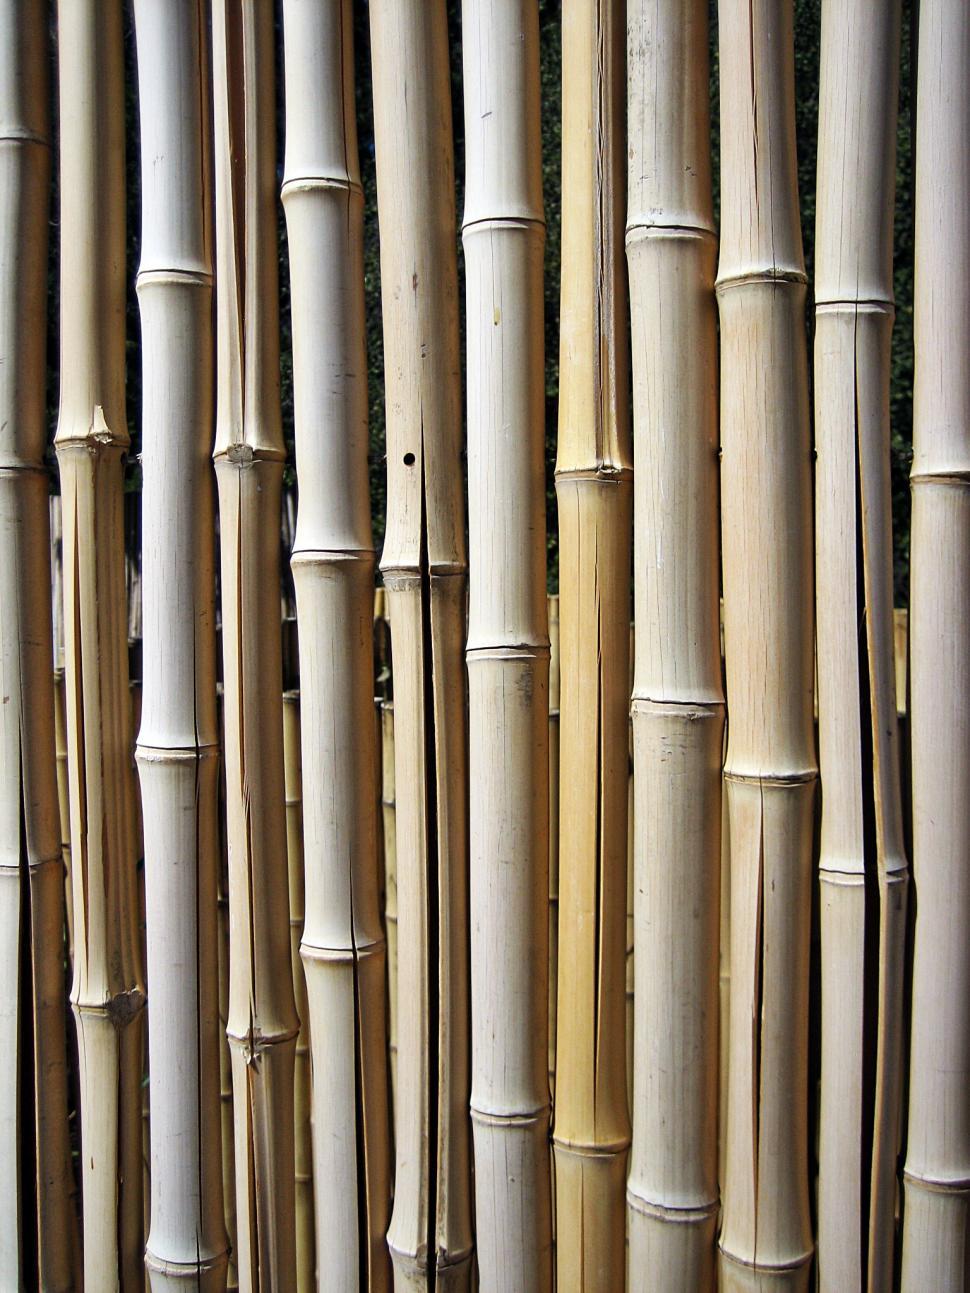 Free Image of Bamboo Fence 